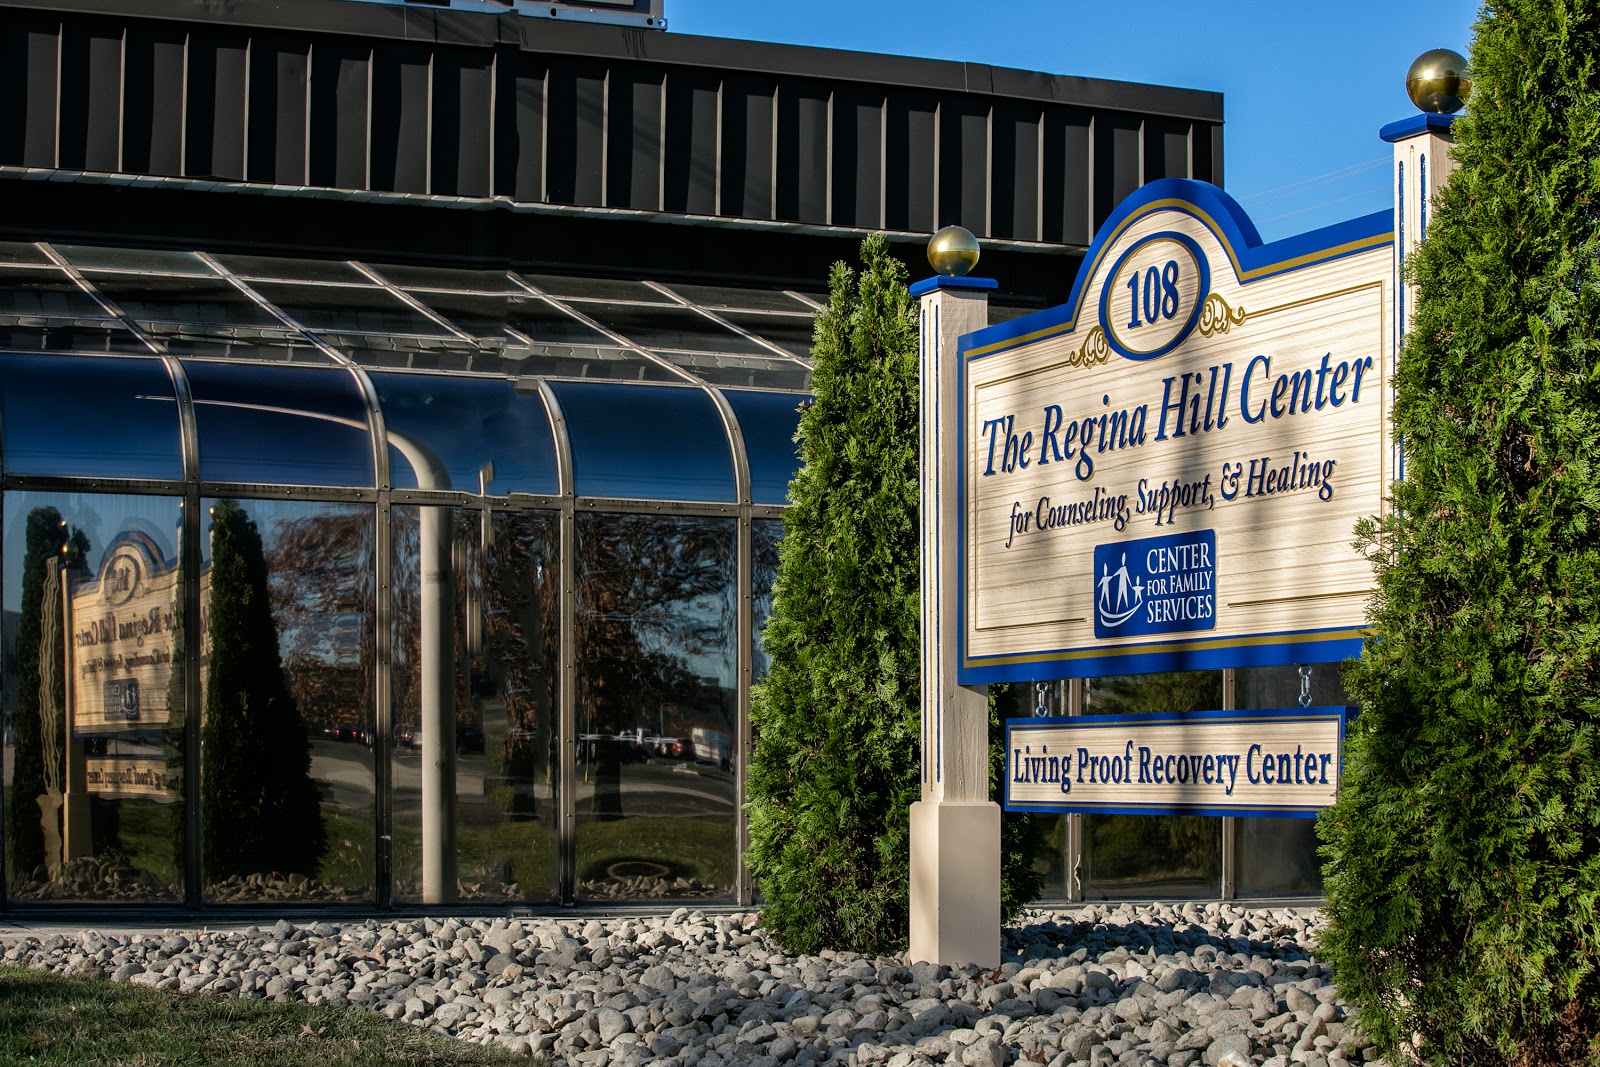 Center for Family Services - The Regina Hill Center